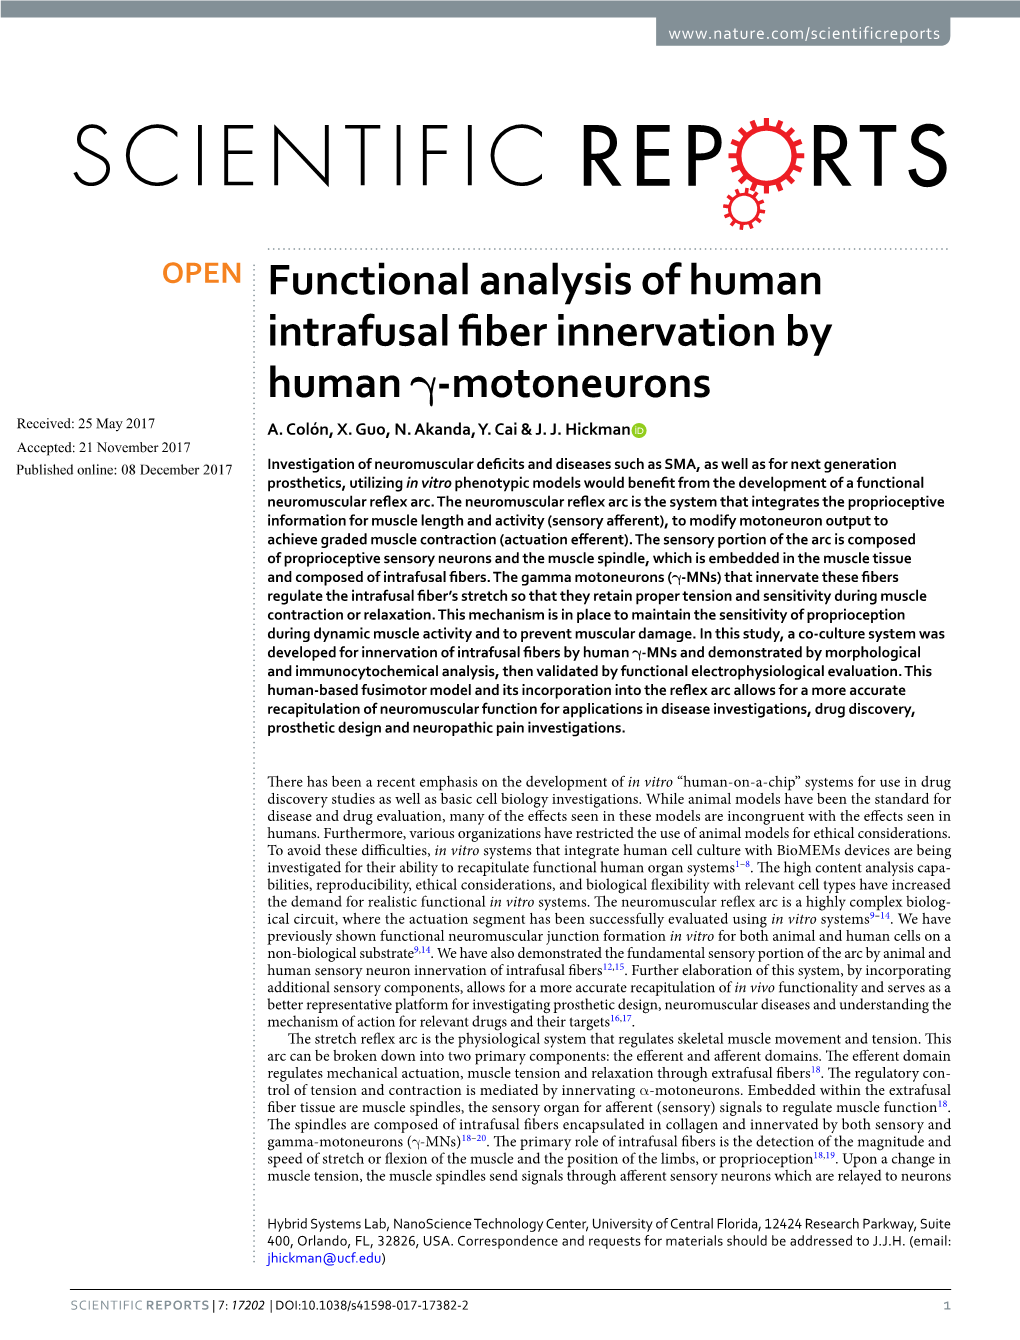 Functional Analysis of Human Intrafusal Fiber Innervation by Human Γ-Motoneurons